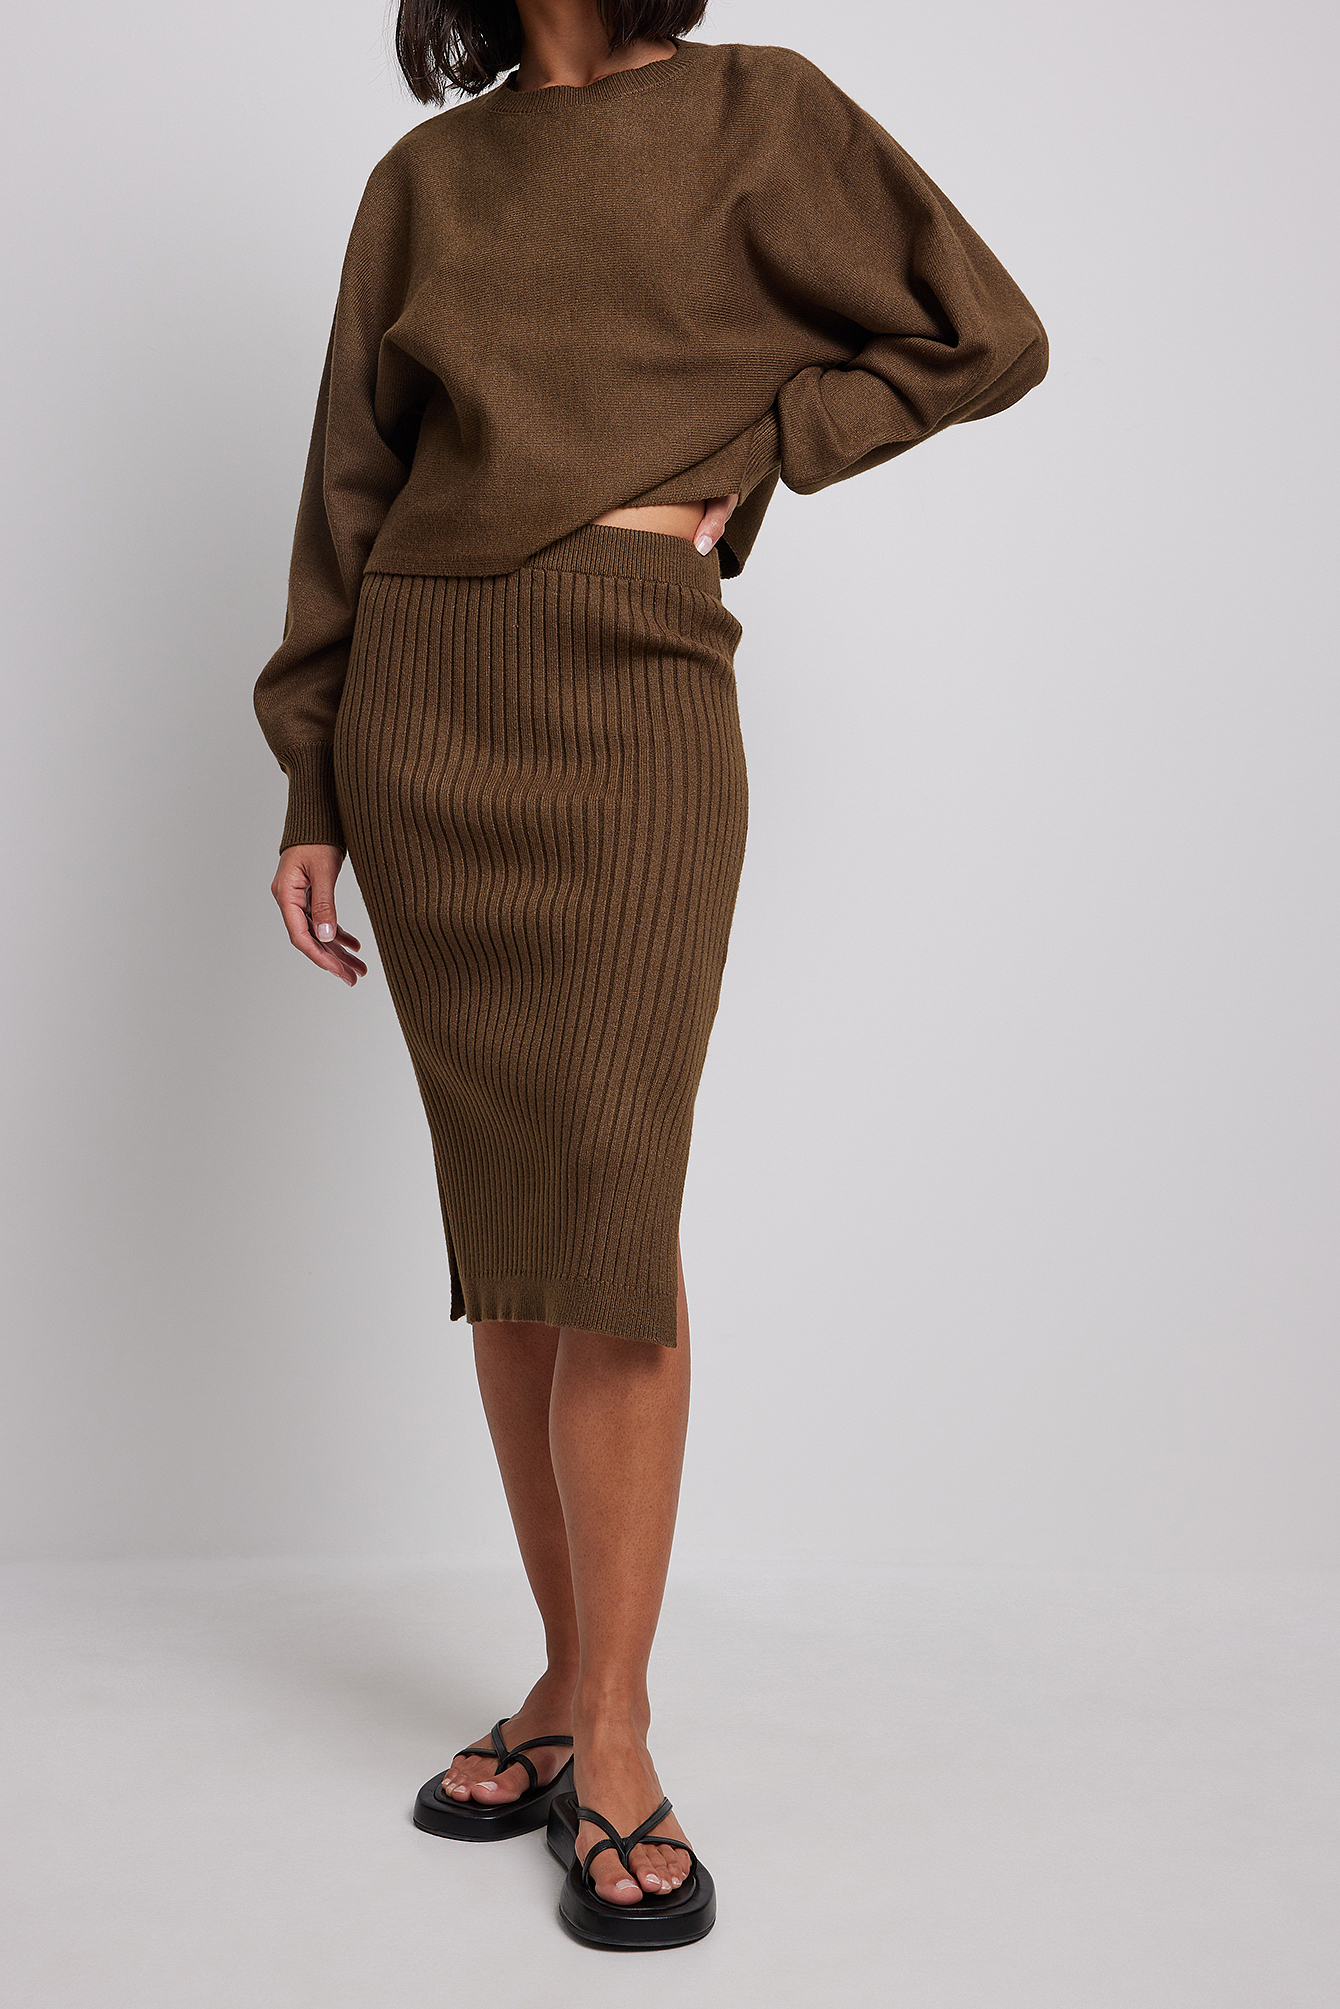 discount 78% WOMEN FASHION Skirts Casual skirt Print Brown/Orange 38                  EU NoName casual skirt 